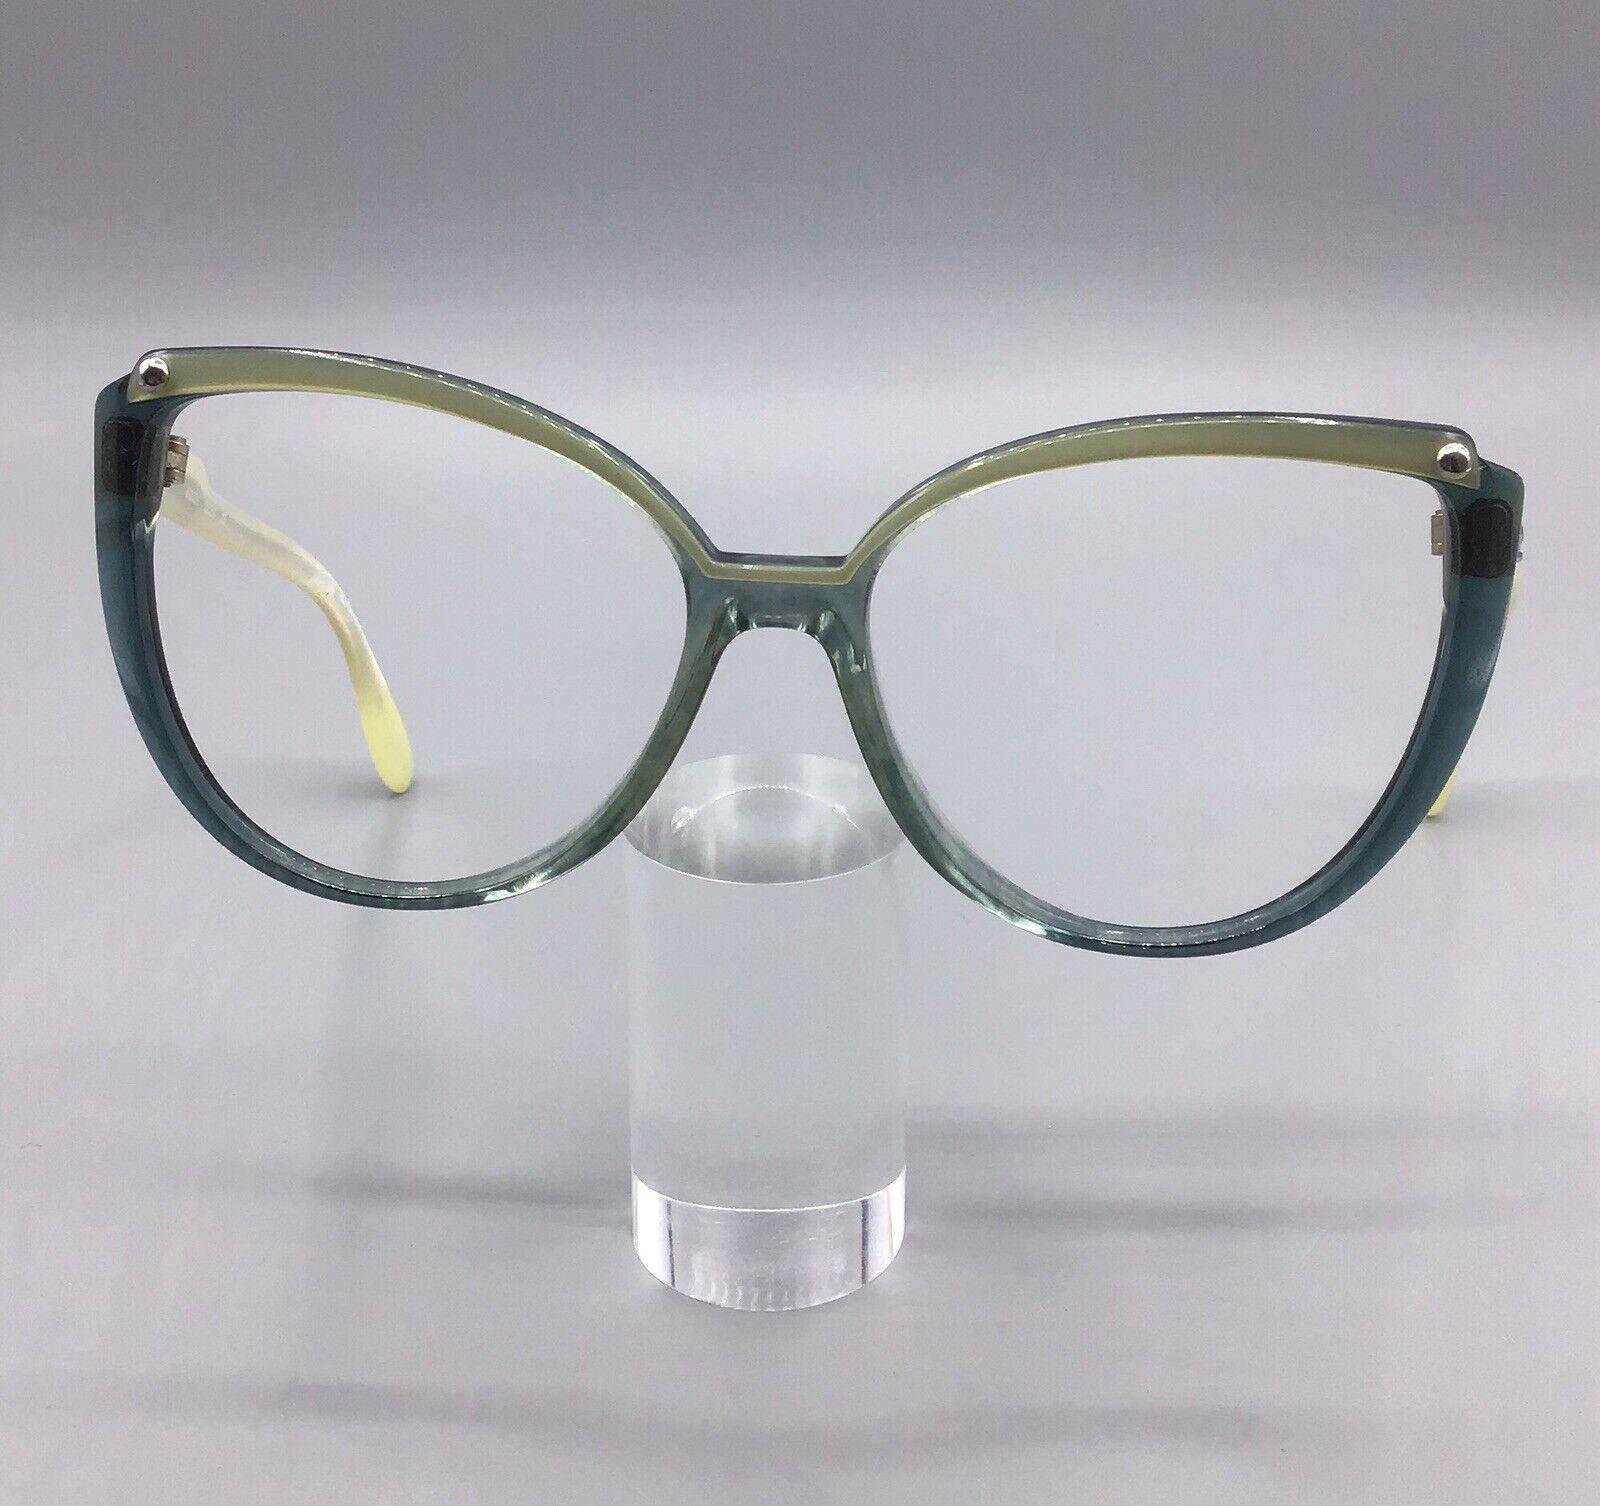 Silhouette occhiale eyewear Austria mod.3019 col.2513 brillen lunettes frame